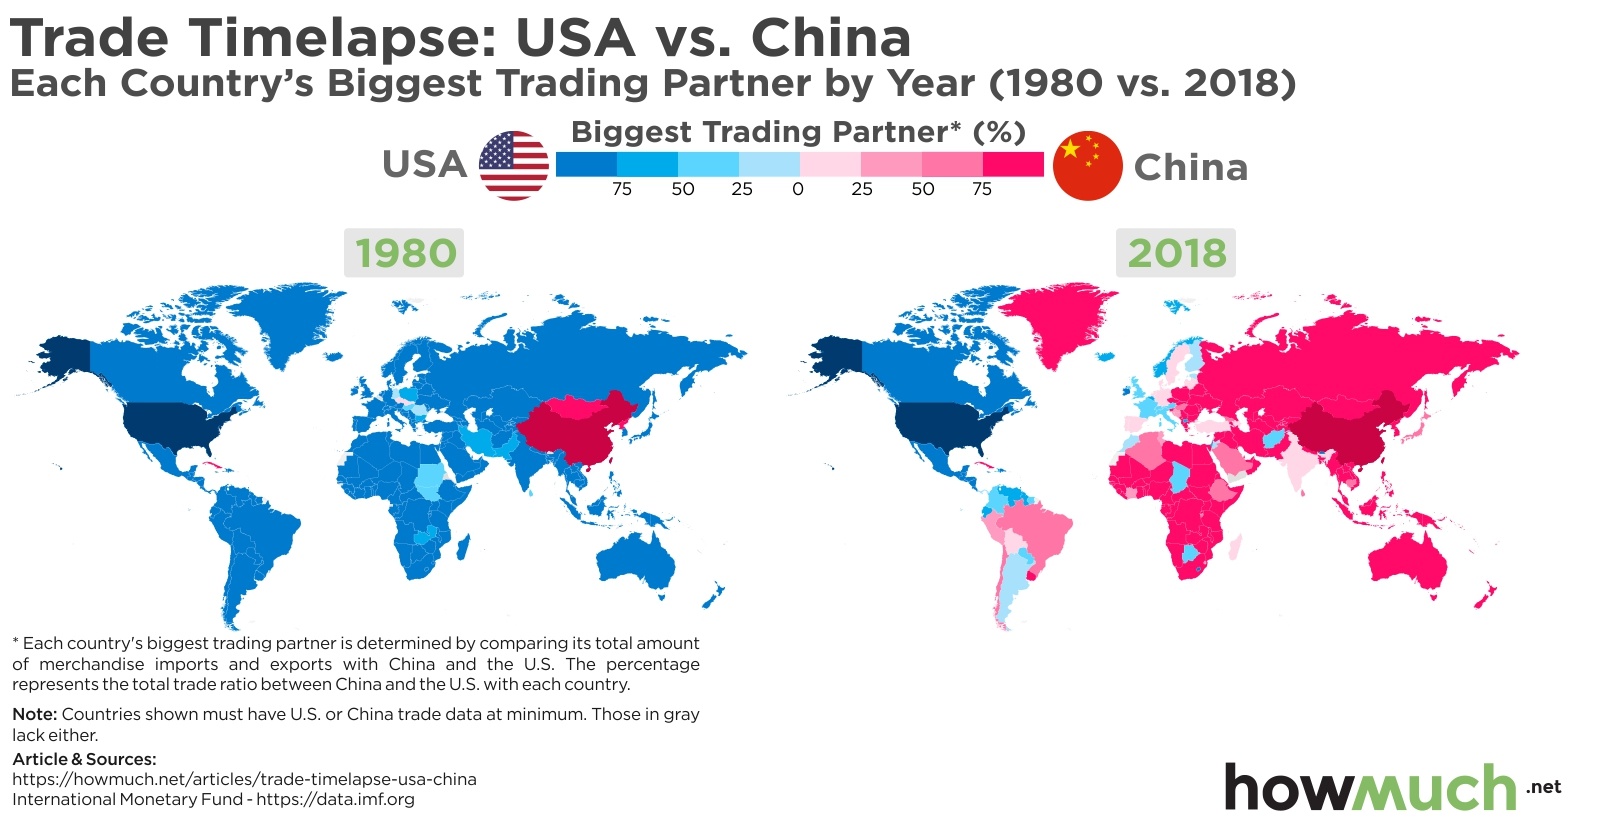 trade-timelapse-usa-china_comparison-c46d.jpg